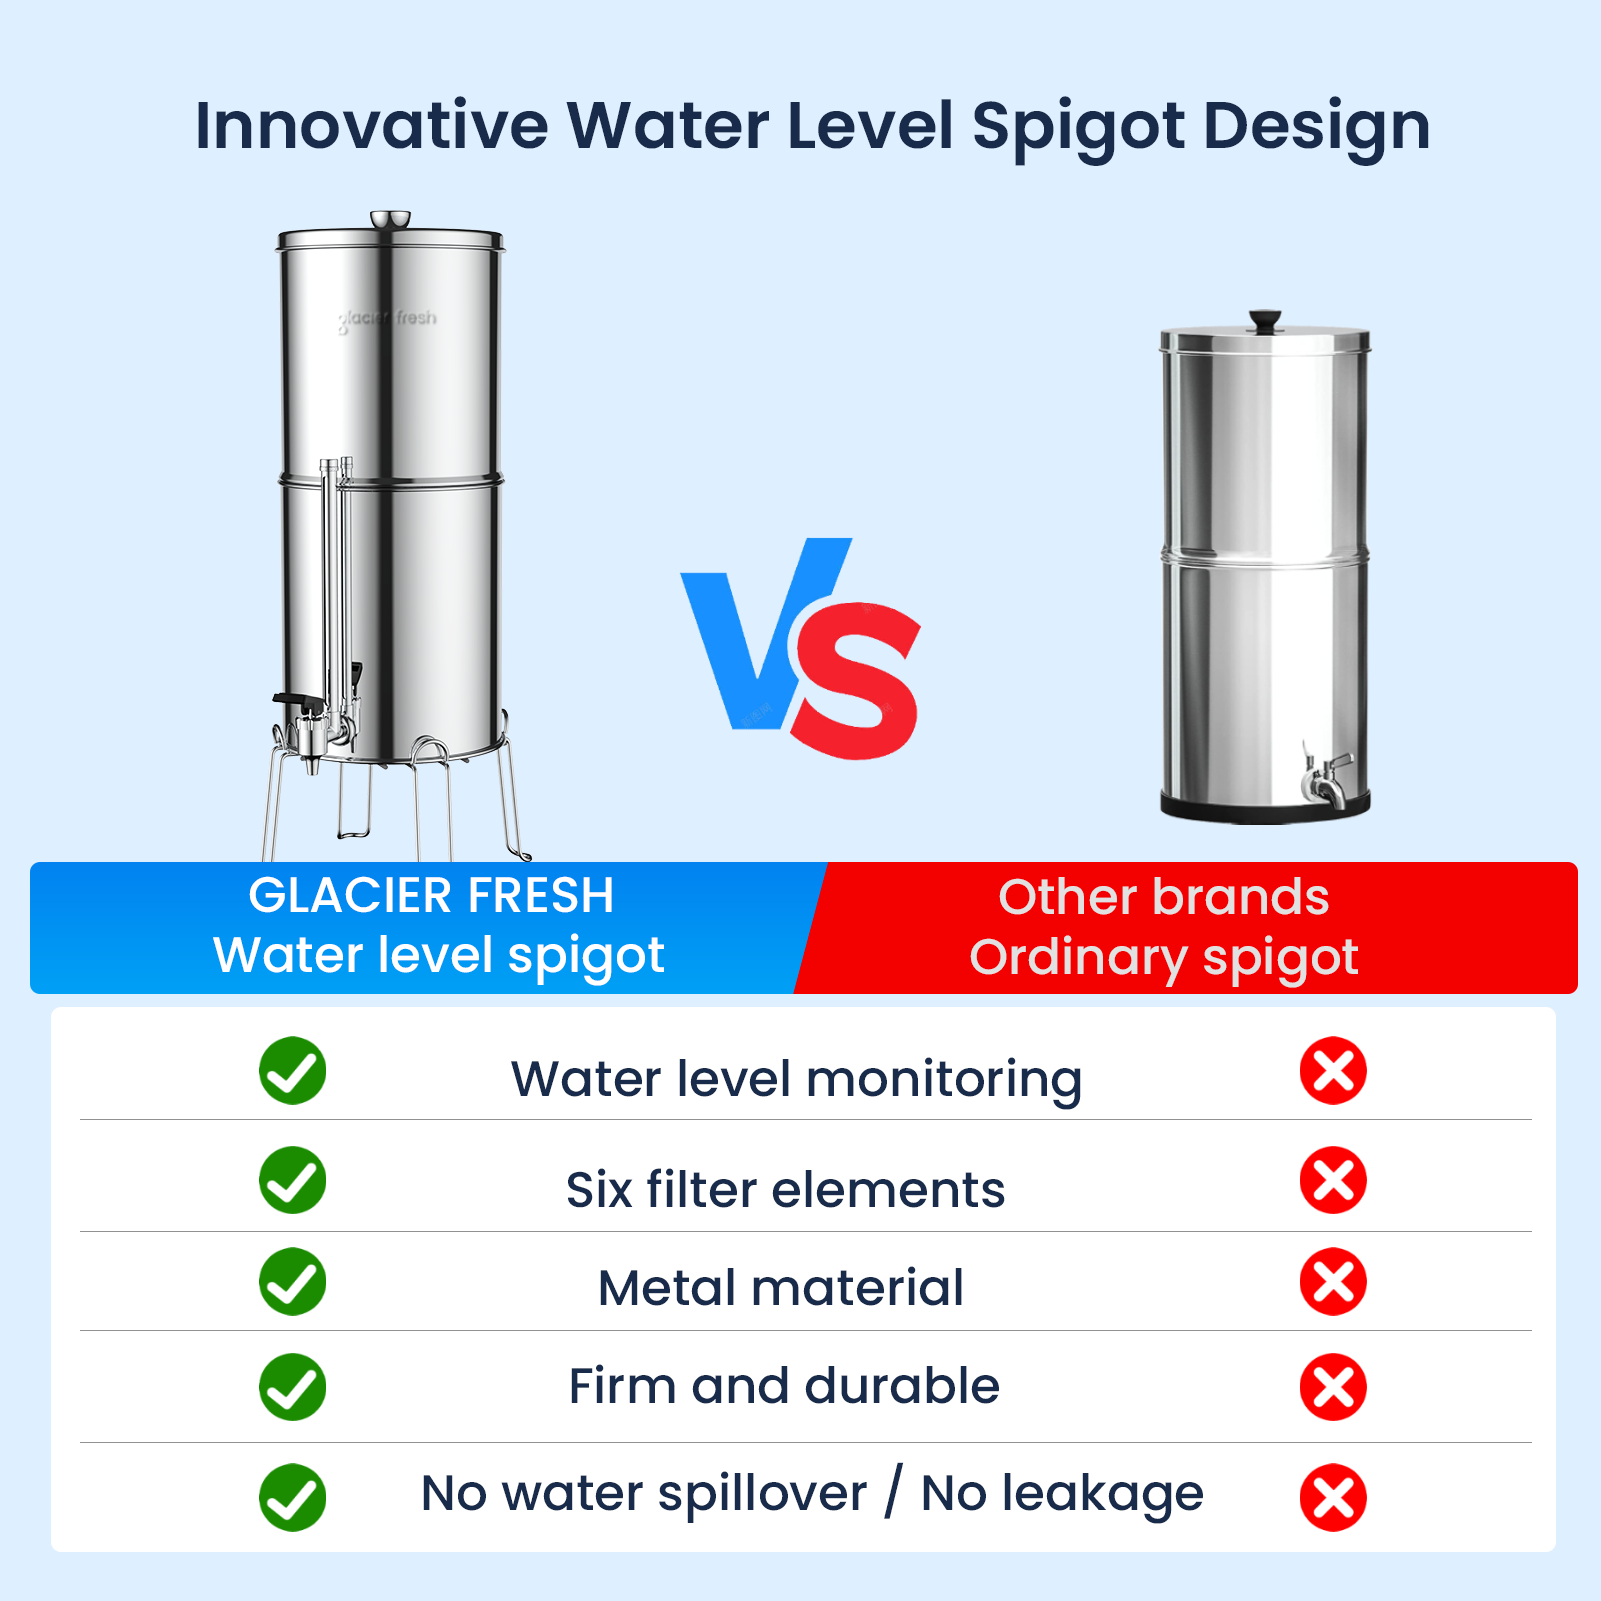 Berkey Water Filters vs Clearsource Water Filter Systems – TechnoRV